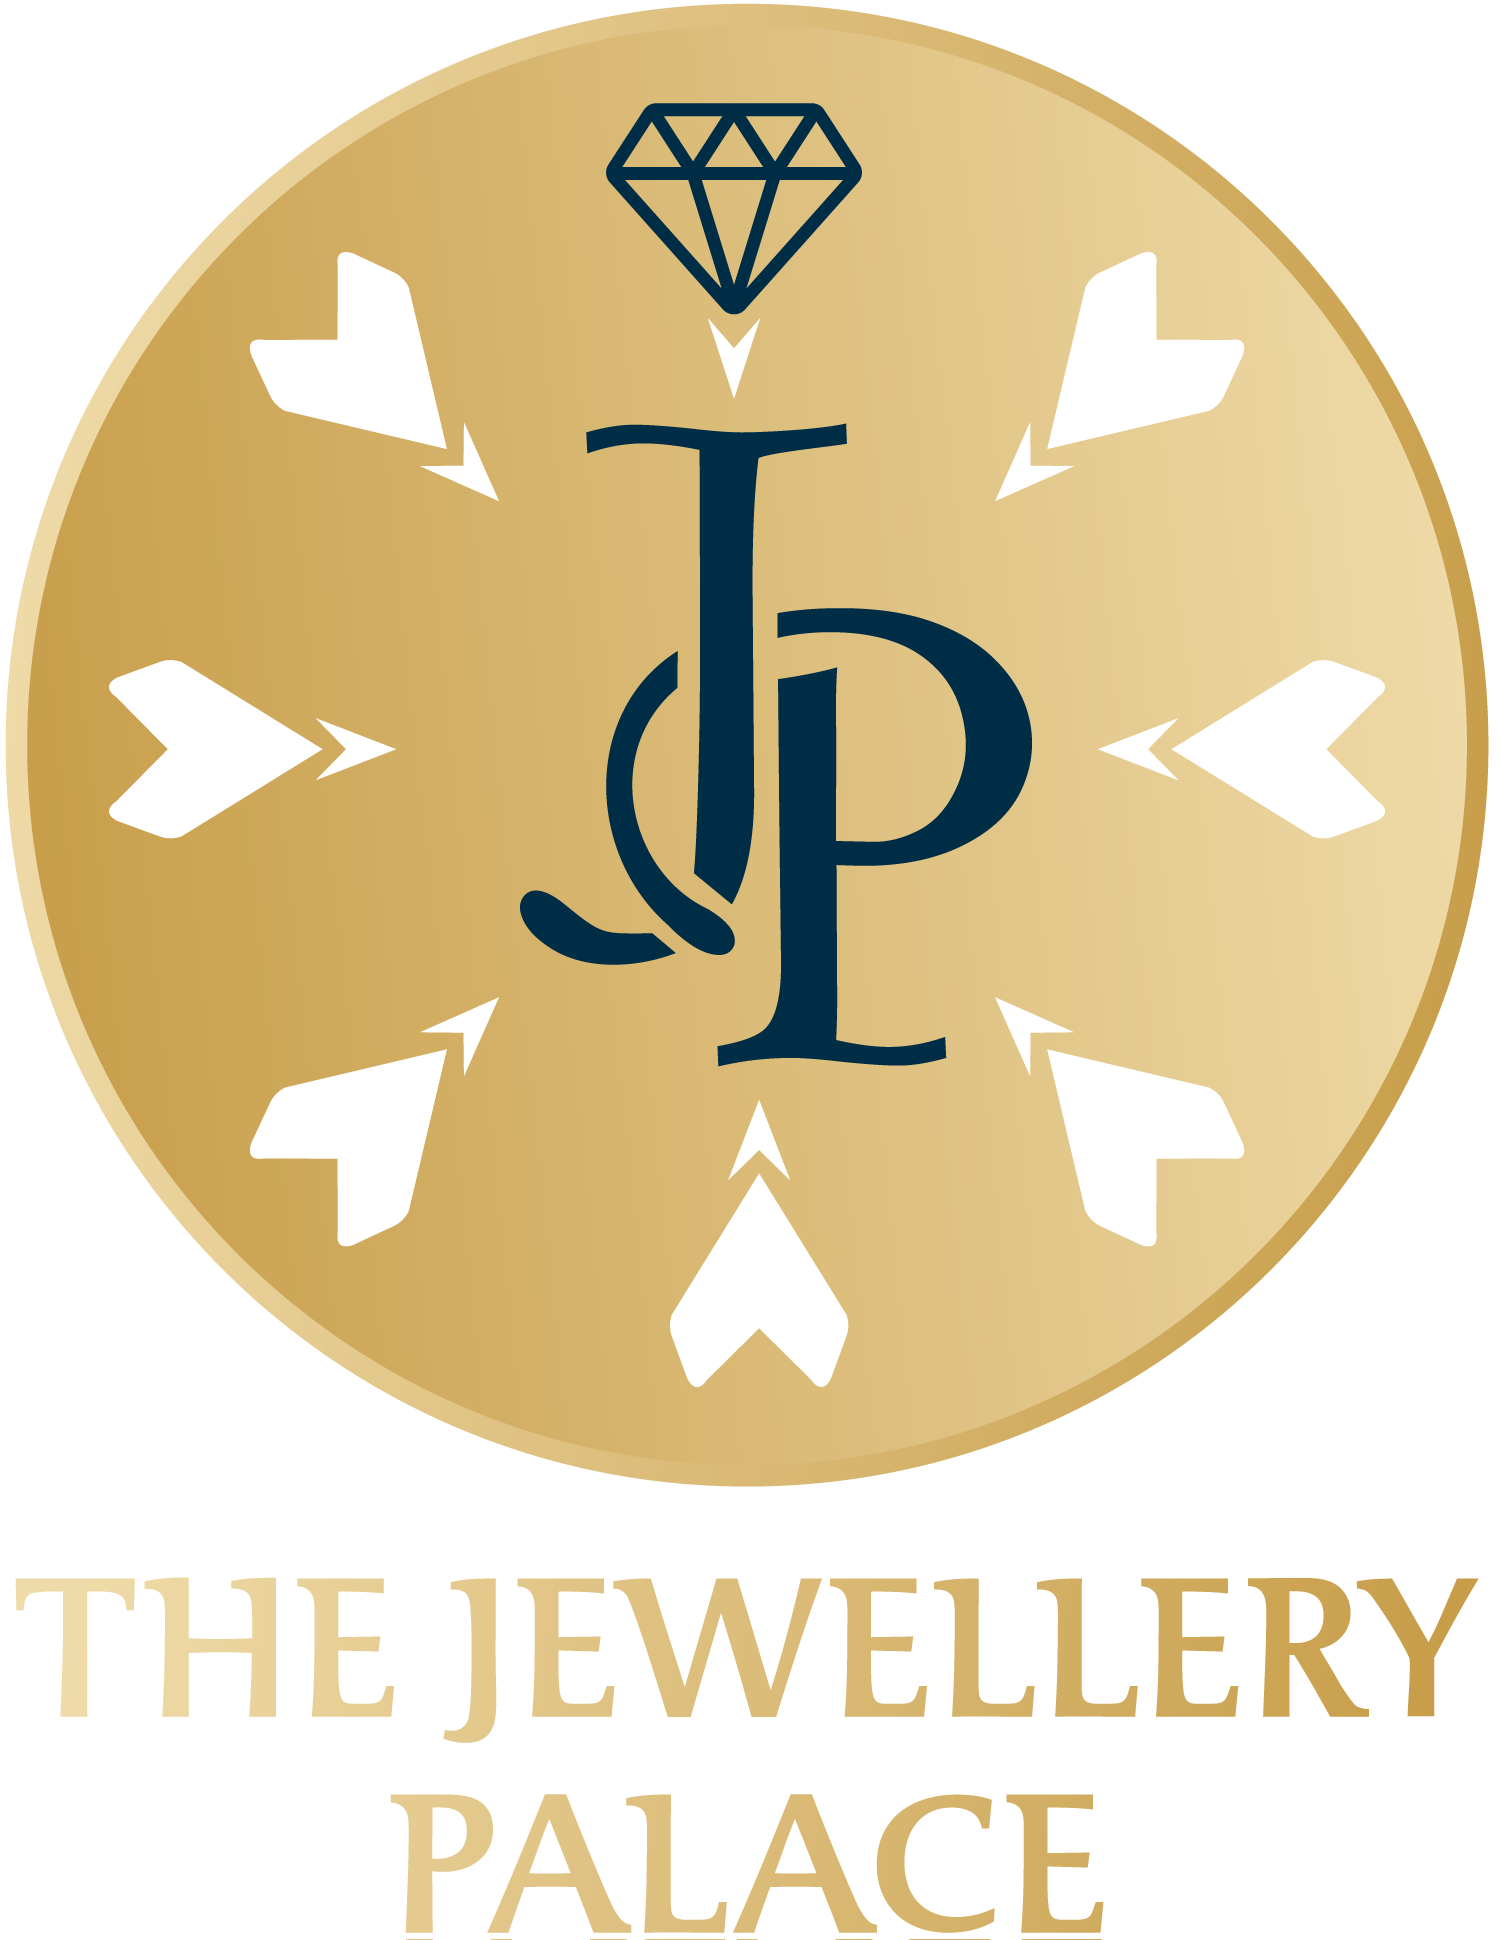 The Jewellery Palace